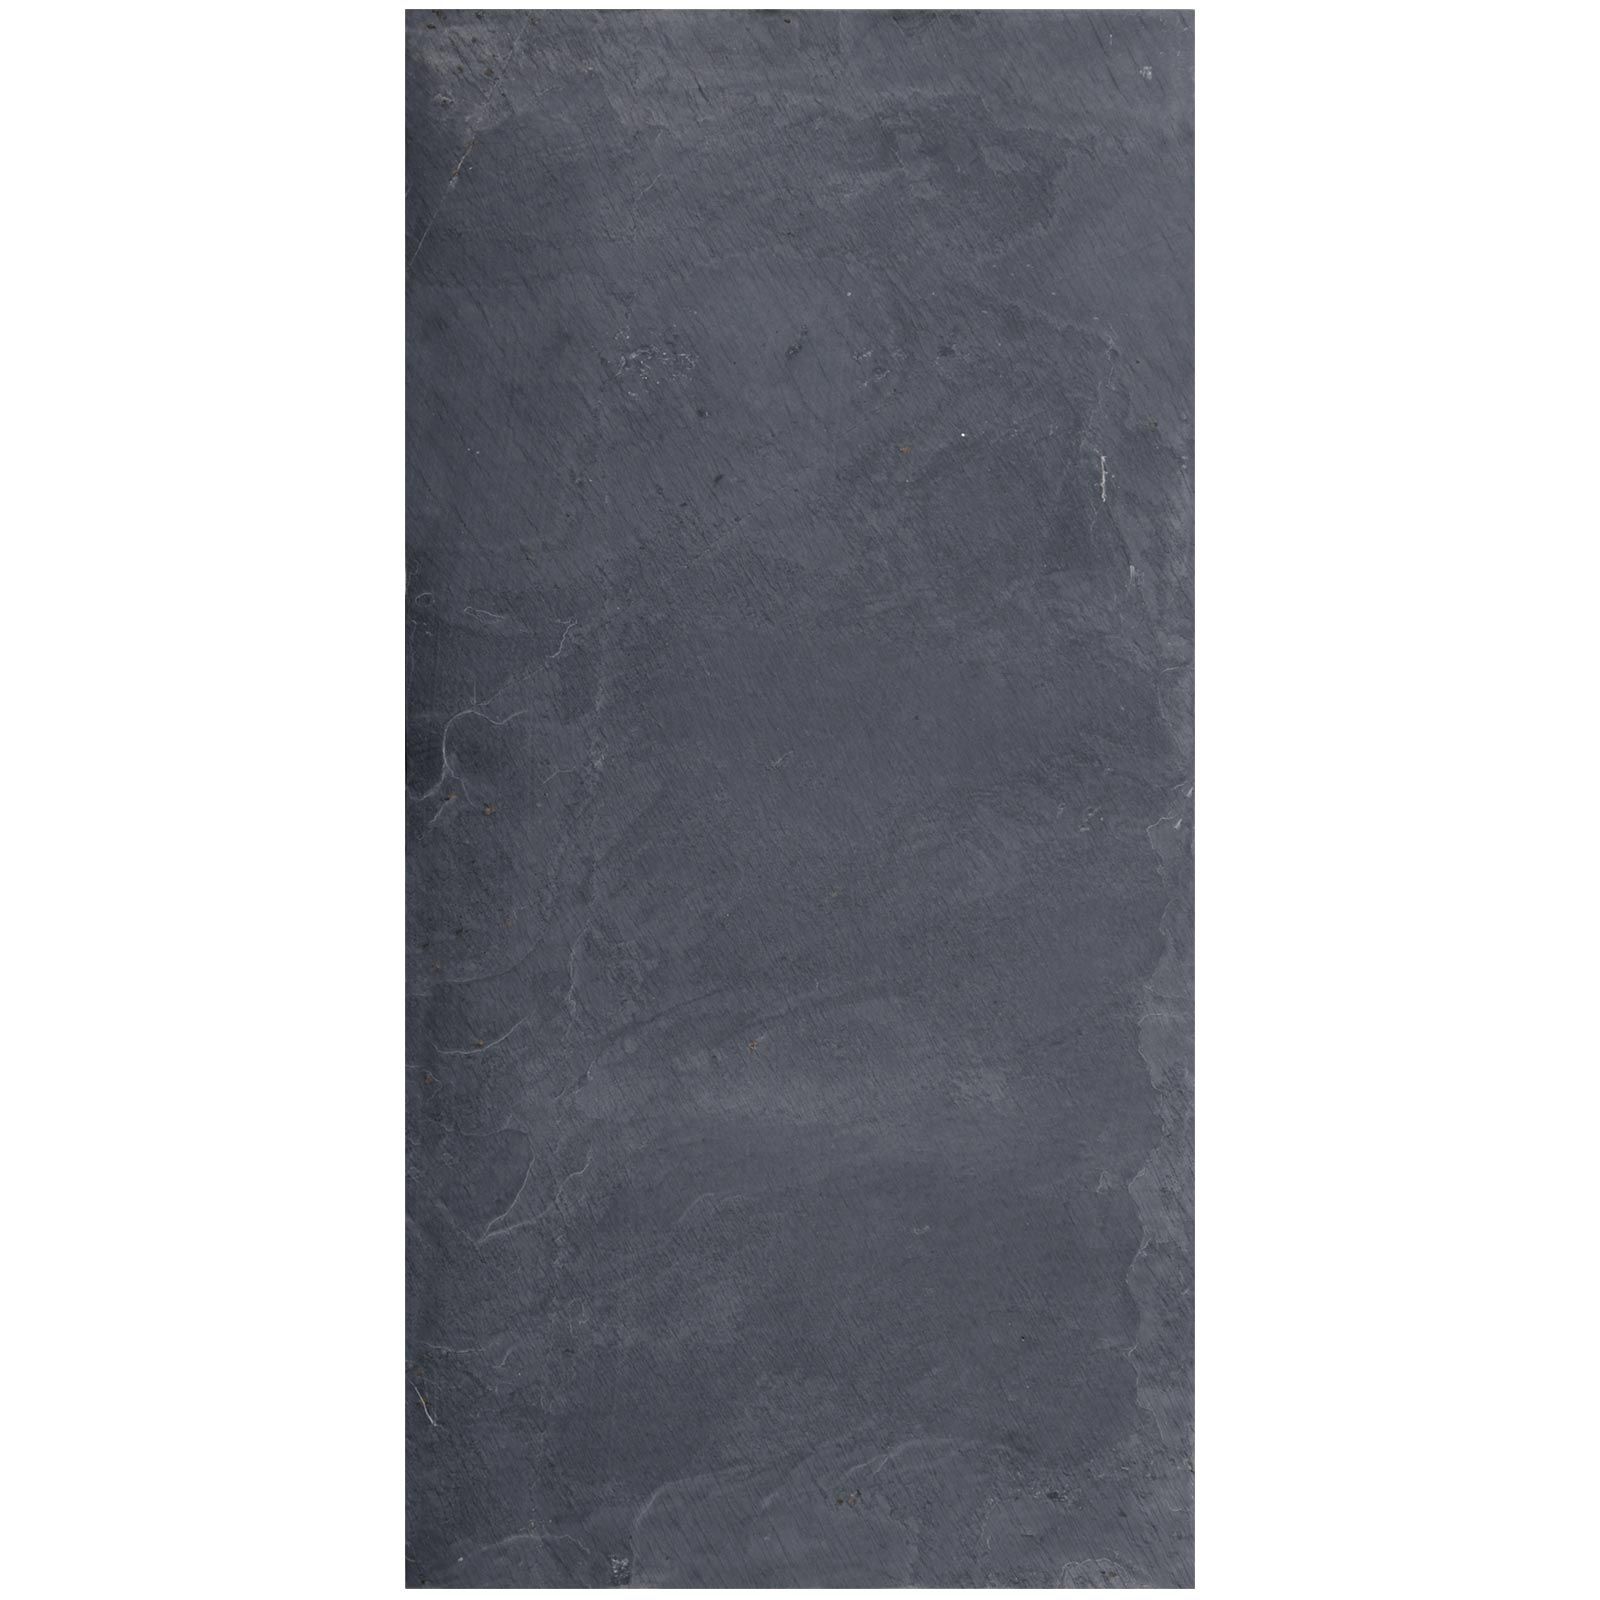 Płytki Łupek Black Slate naturalny 60x30x0,9-1,2 cm